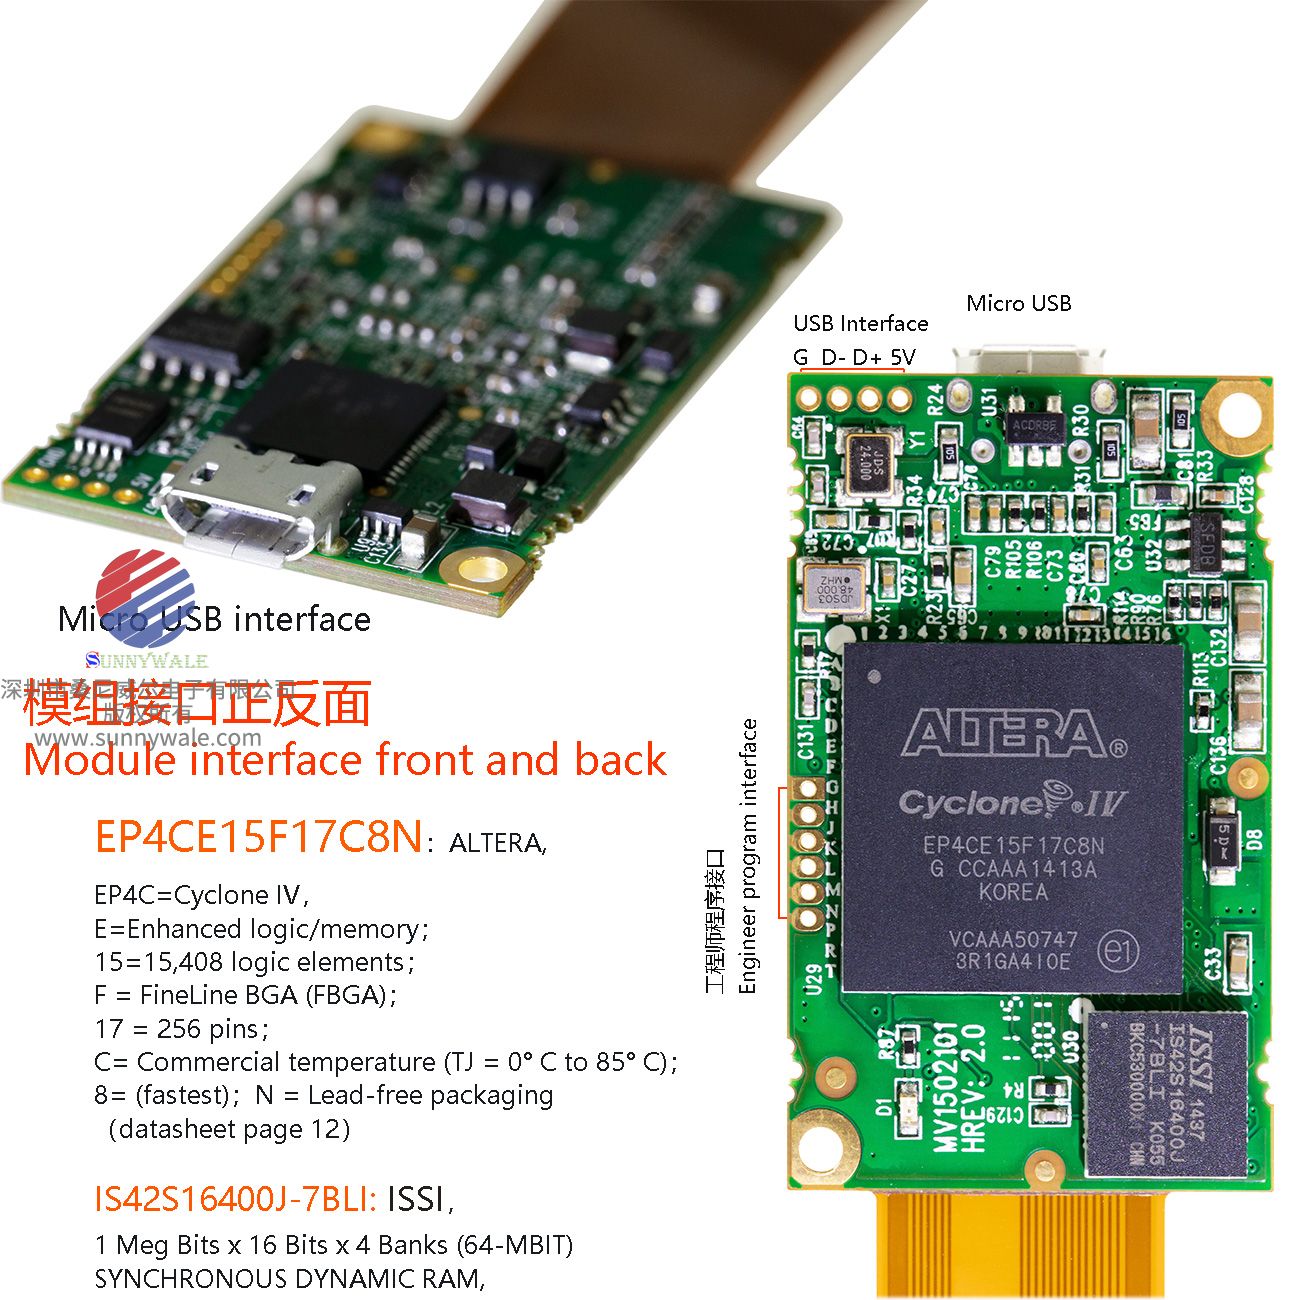 EV76C660ABT，MSS5, e2v图像传感器，1.3M超高感光度sensor，全新成品摄像头模组，机械臂工业相机、手持扫描仪模组，EP4CE15F17C8N，阿特拉FPGA，现场可编程门阵列，field-programmable gate array，爱尔创3D扫描仪Upscan-xx摄像头，爱尔创3D扫描仪驱动程序，CY7C68013 USB2.0驱动程序下载，带算力智能摄像头模组